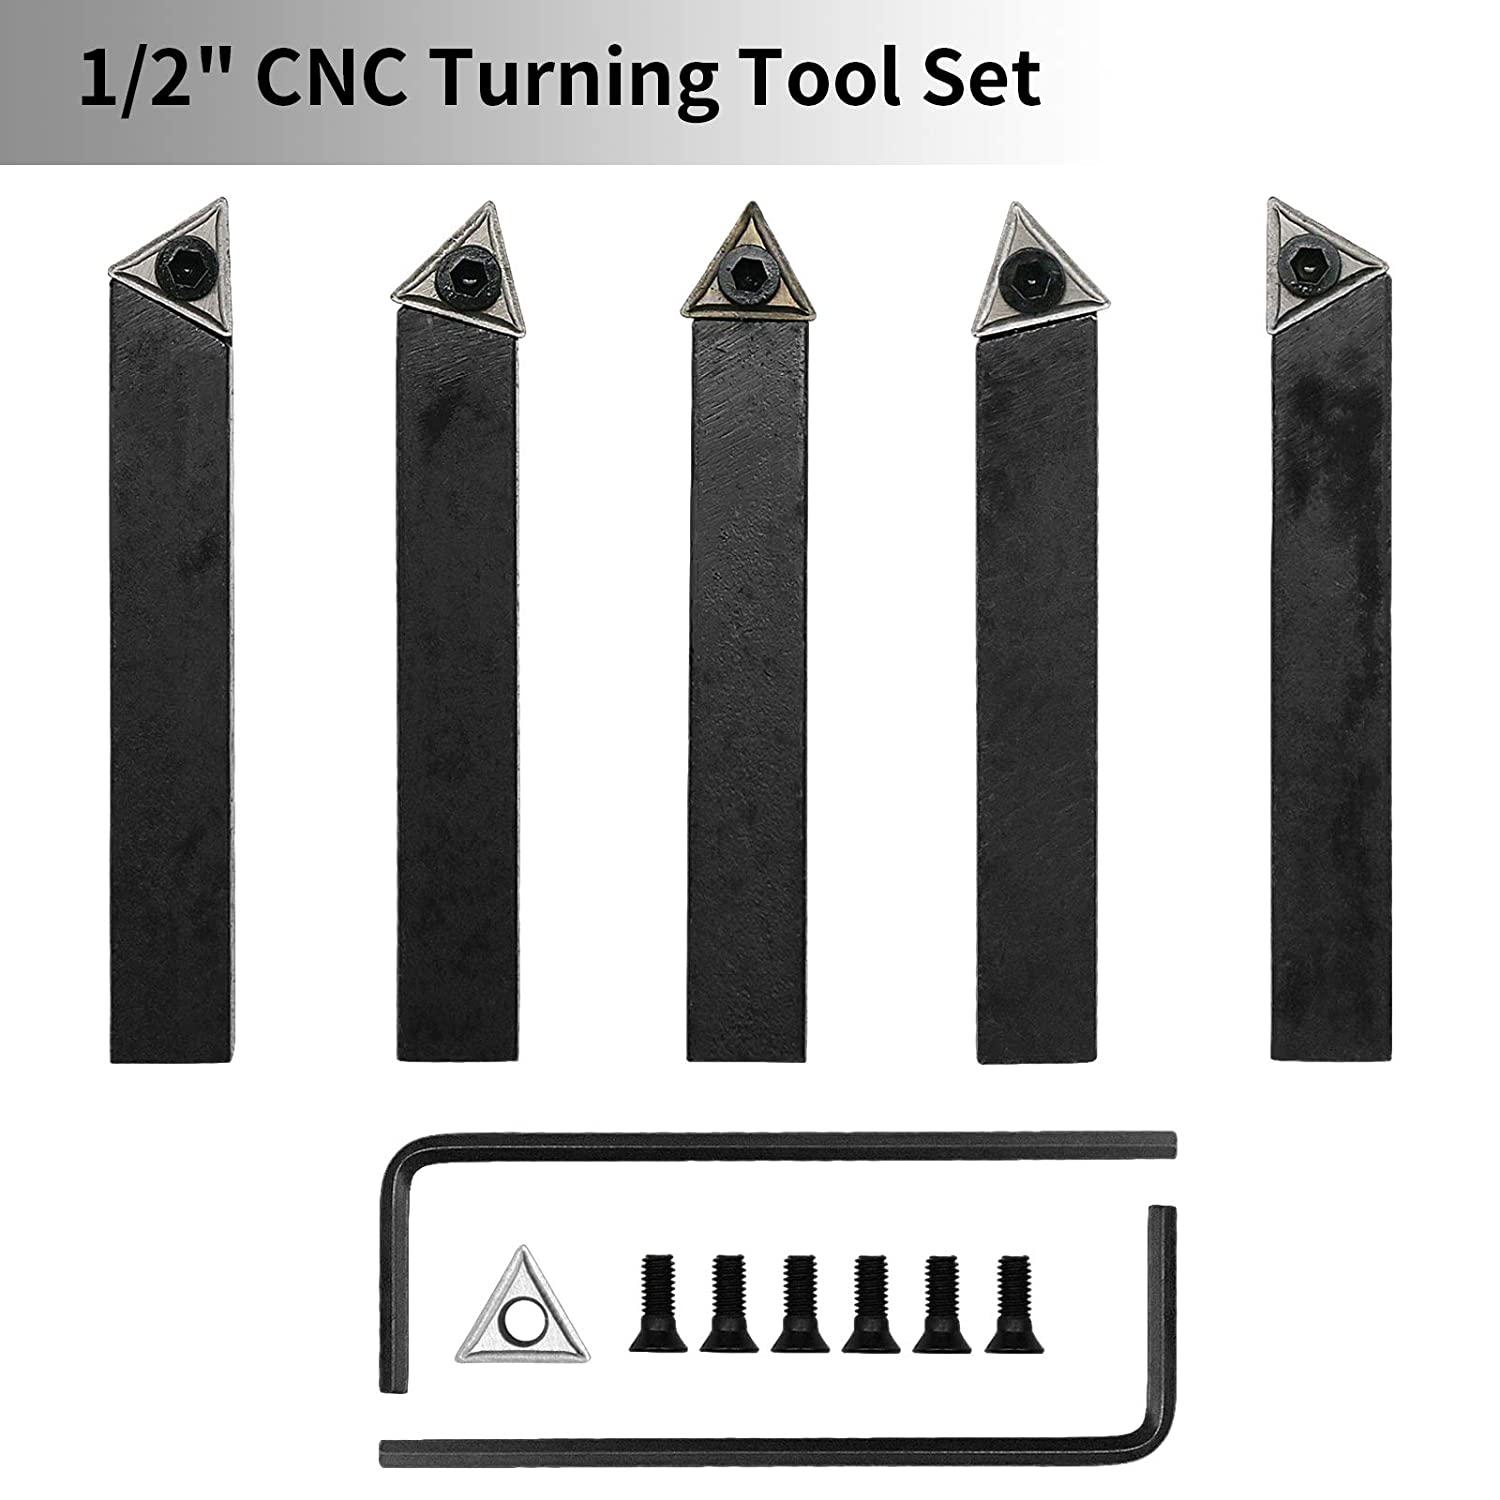 Ocut 5-Piece Cnc Turning Tool Holder Set 1/2″ External Turning Tool Holder Machine Clamp Small Turning Tool Insert Set use TCMT16T304 Insert - Indexable turning tool - 1